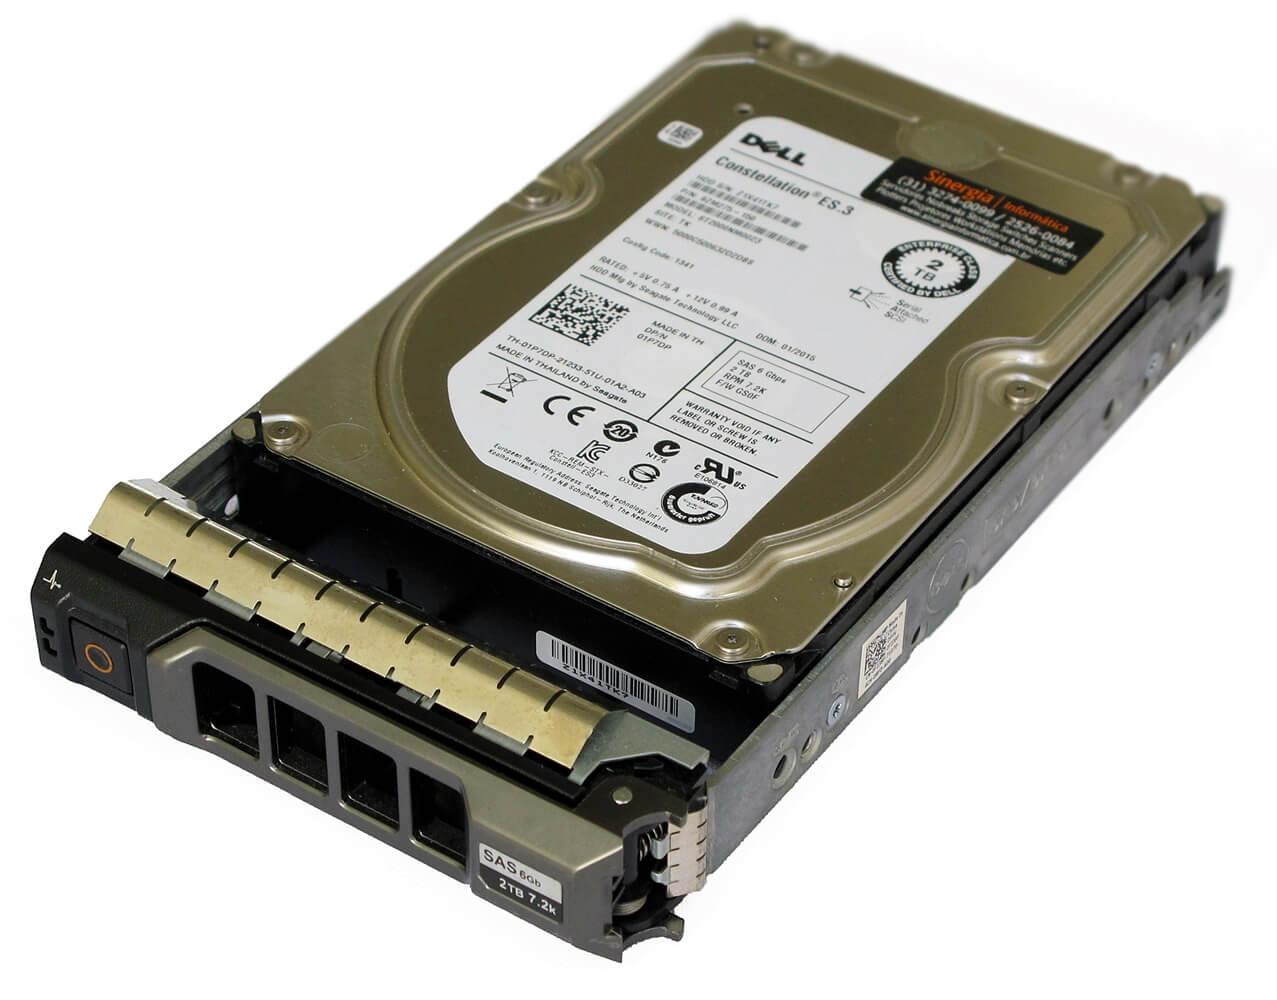 ST32000645SS HD Dell 2TB SAS 6 Gbps 7.2K RPM LFF 3.5" para Storage Dell MD3200 Model pronta entrega